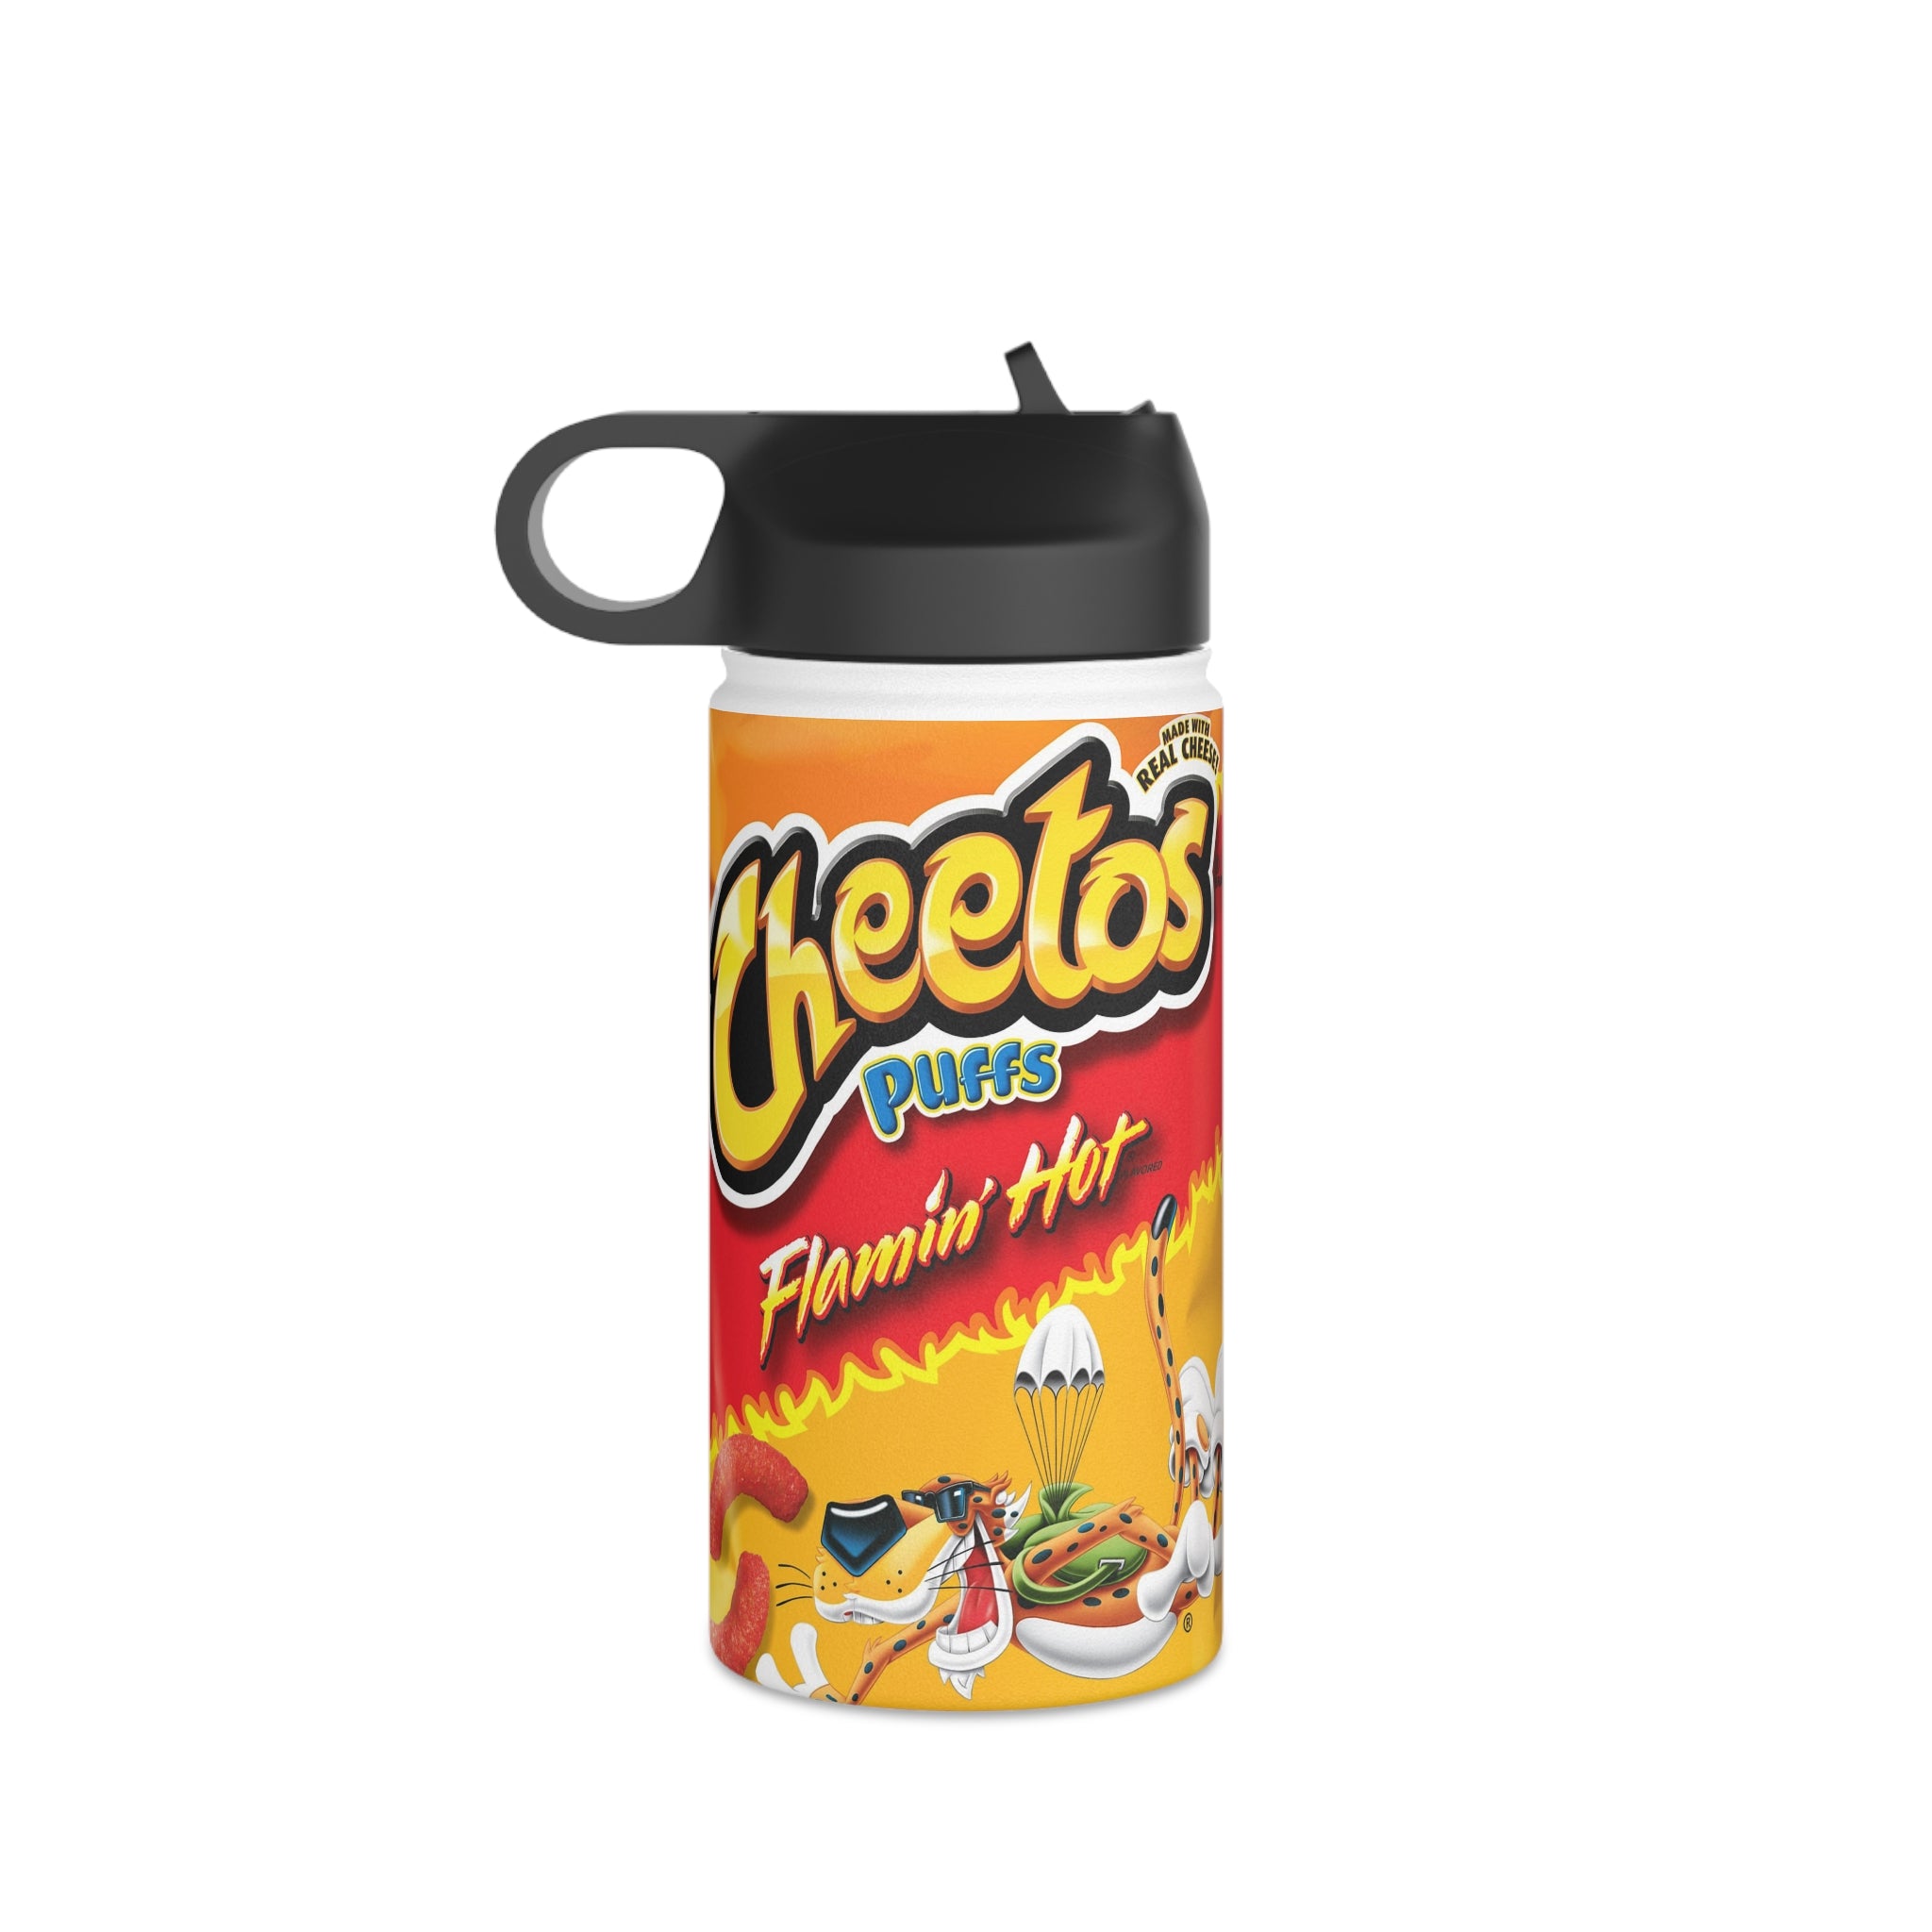 Cheetos Puffs Flamin Hot Stainless Steel Water Bottle, Standard Lid